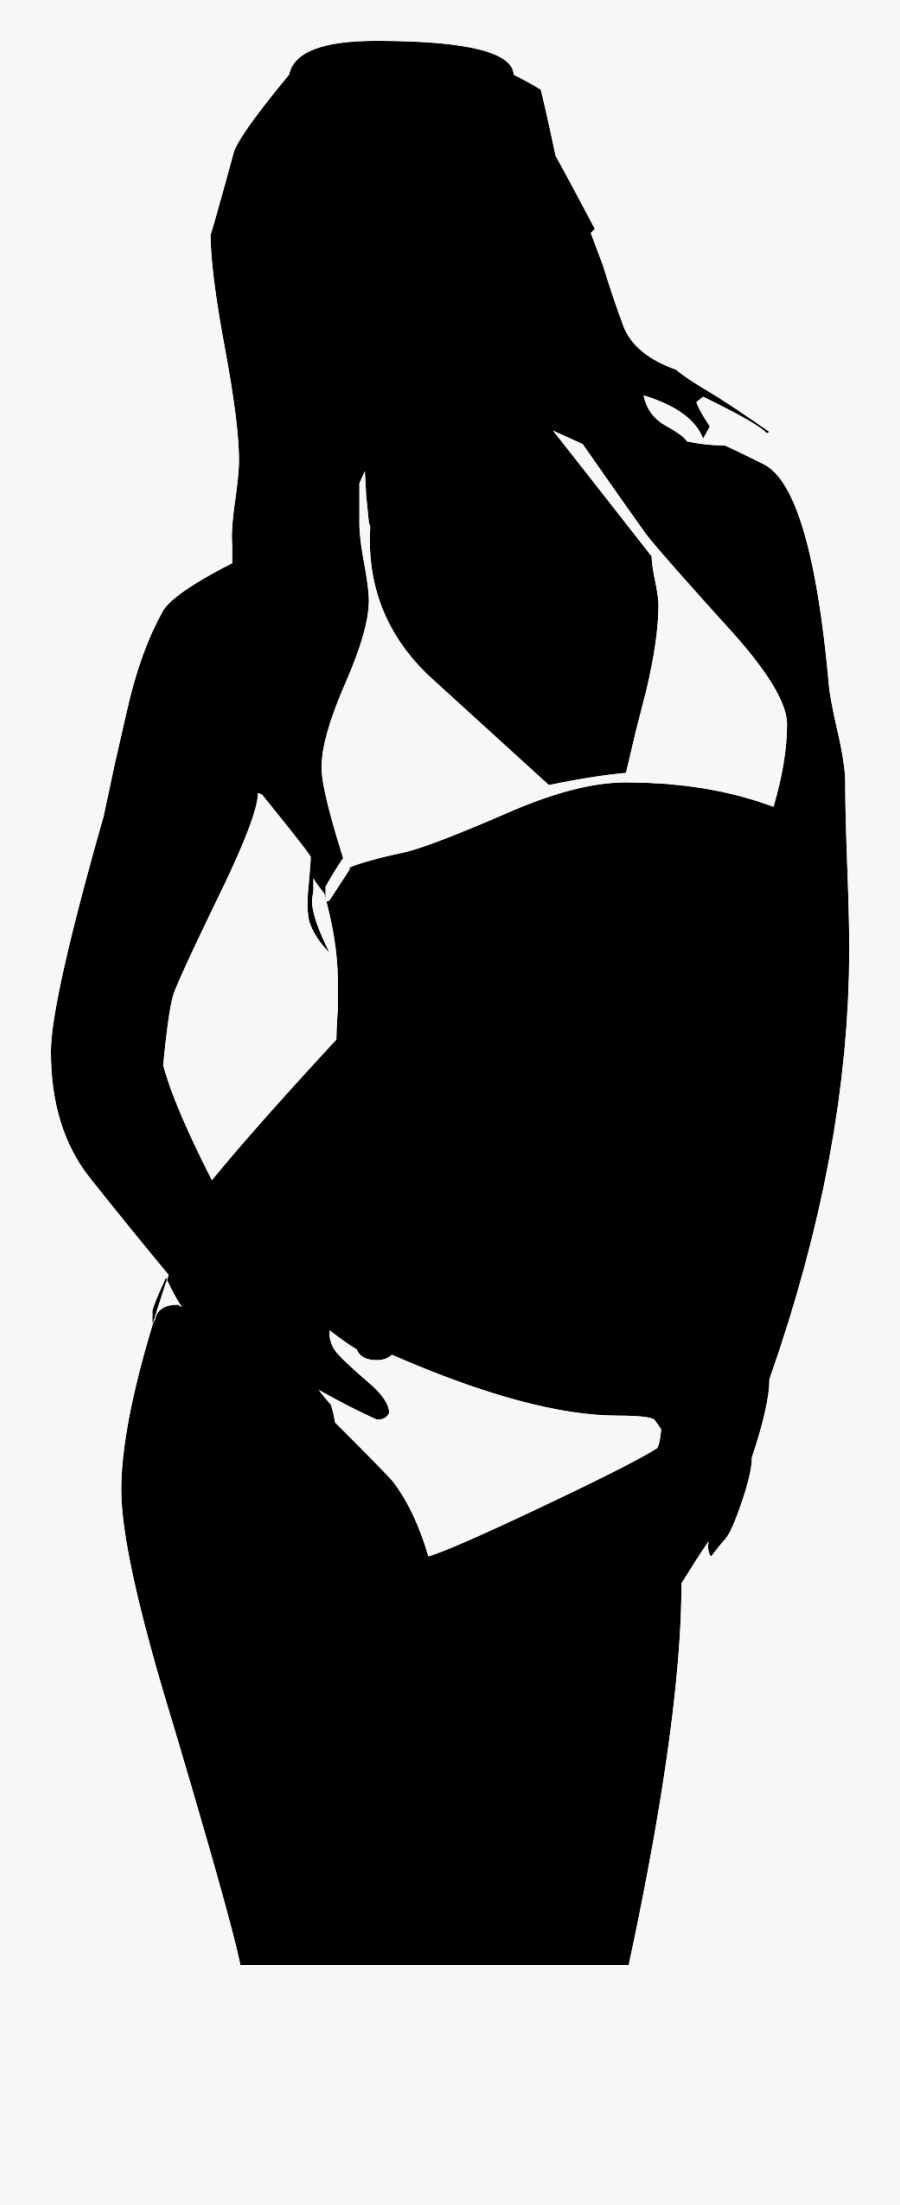 Transparent Girl In Bikini Png - Girl In Bikini Silhouette, Transparent Clipart